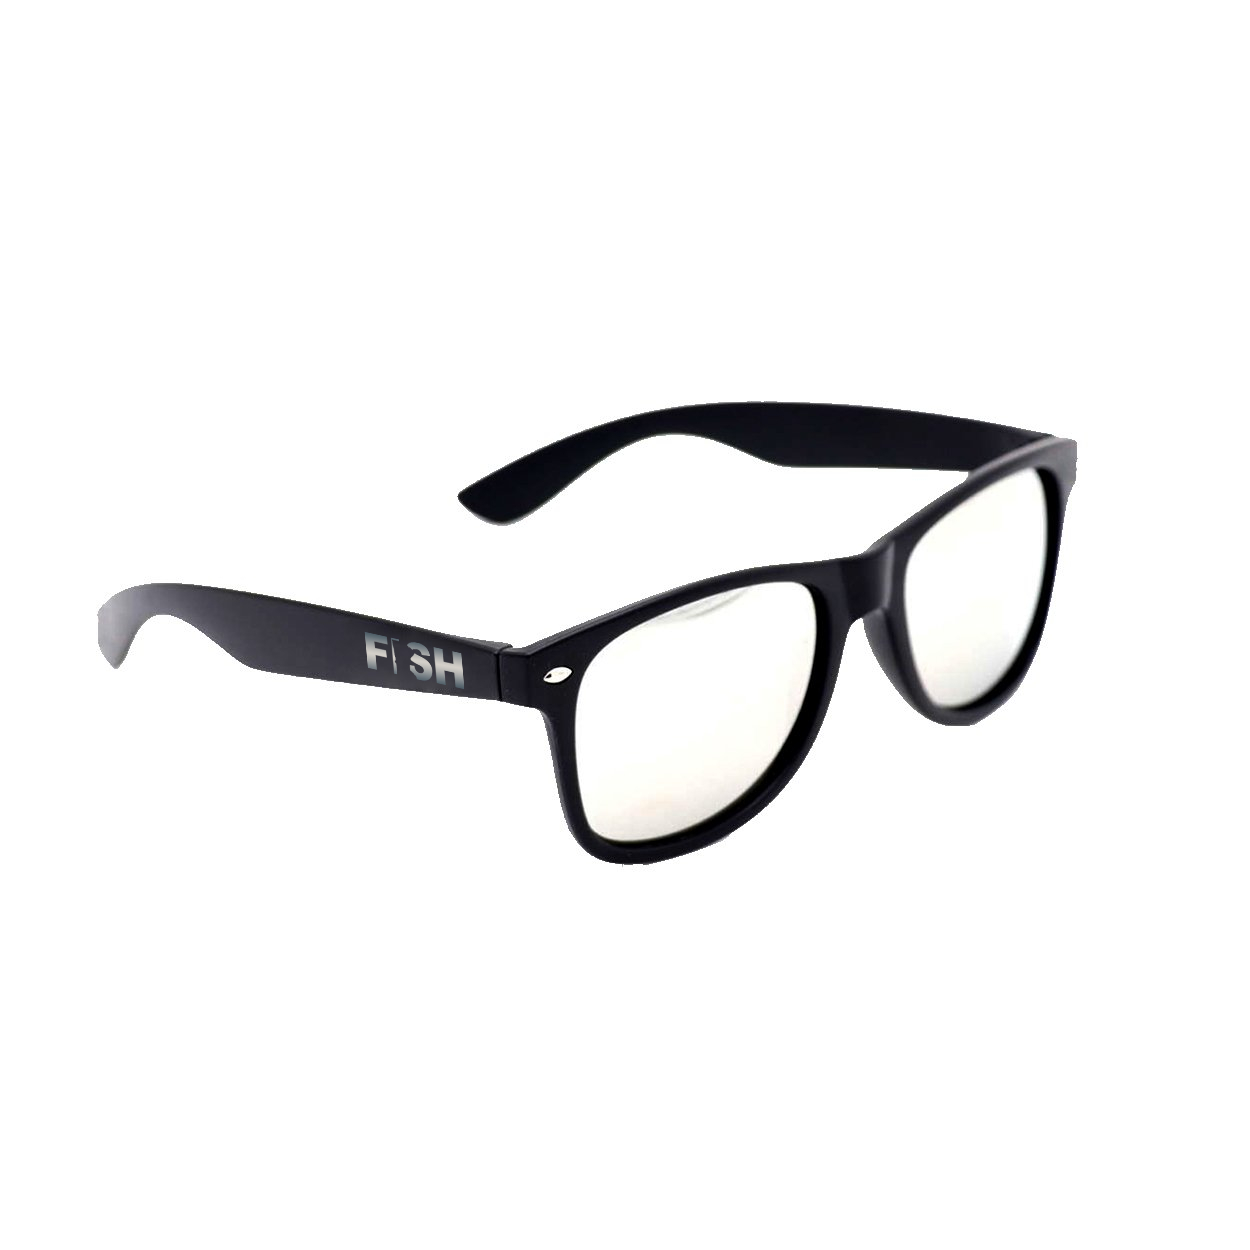 Fish Minnesota Classic Sunglasses Black/Chrome (Chrome Logo)